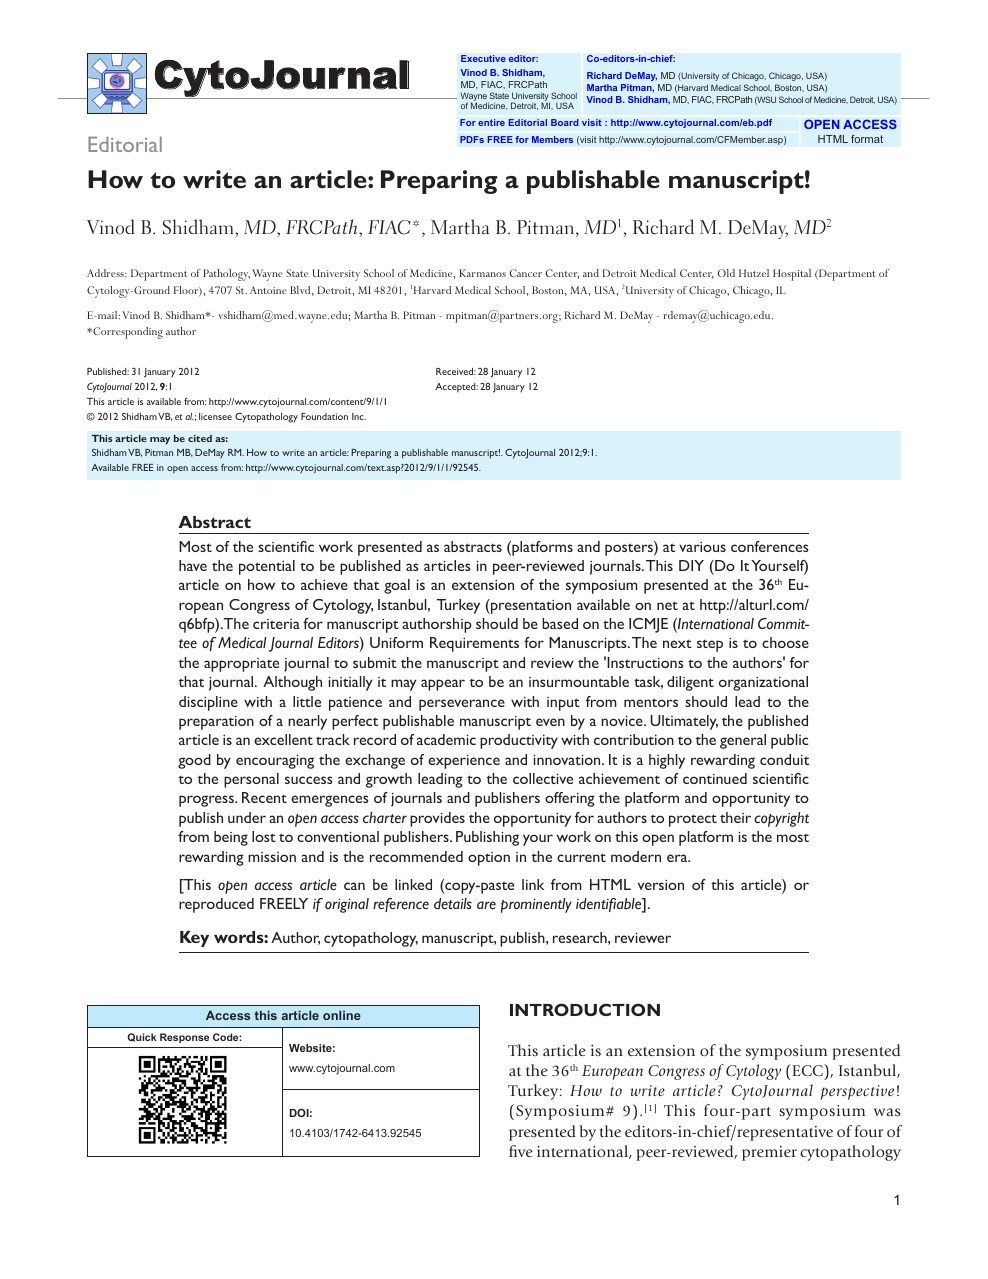 How to write an article: Preparing a publishable manuscript